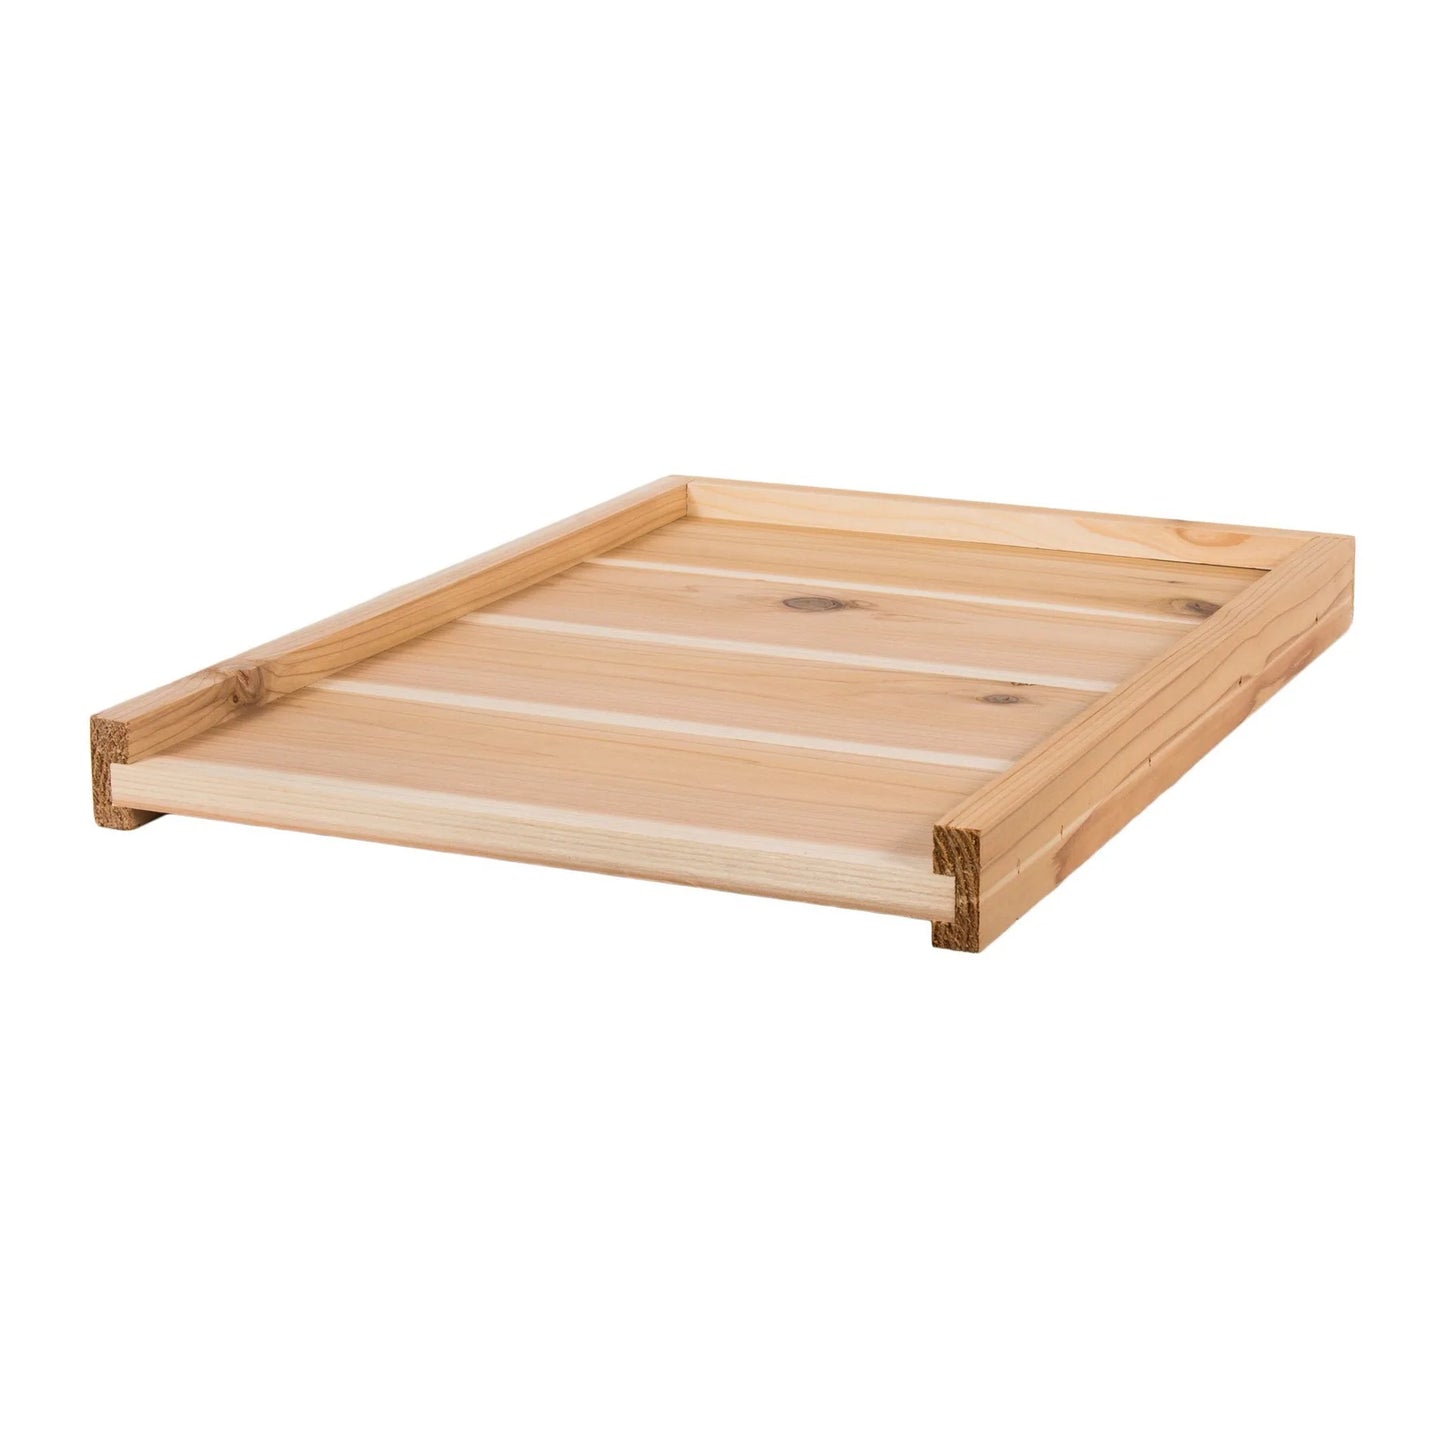 Standard Cedar Bottom Board